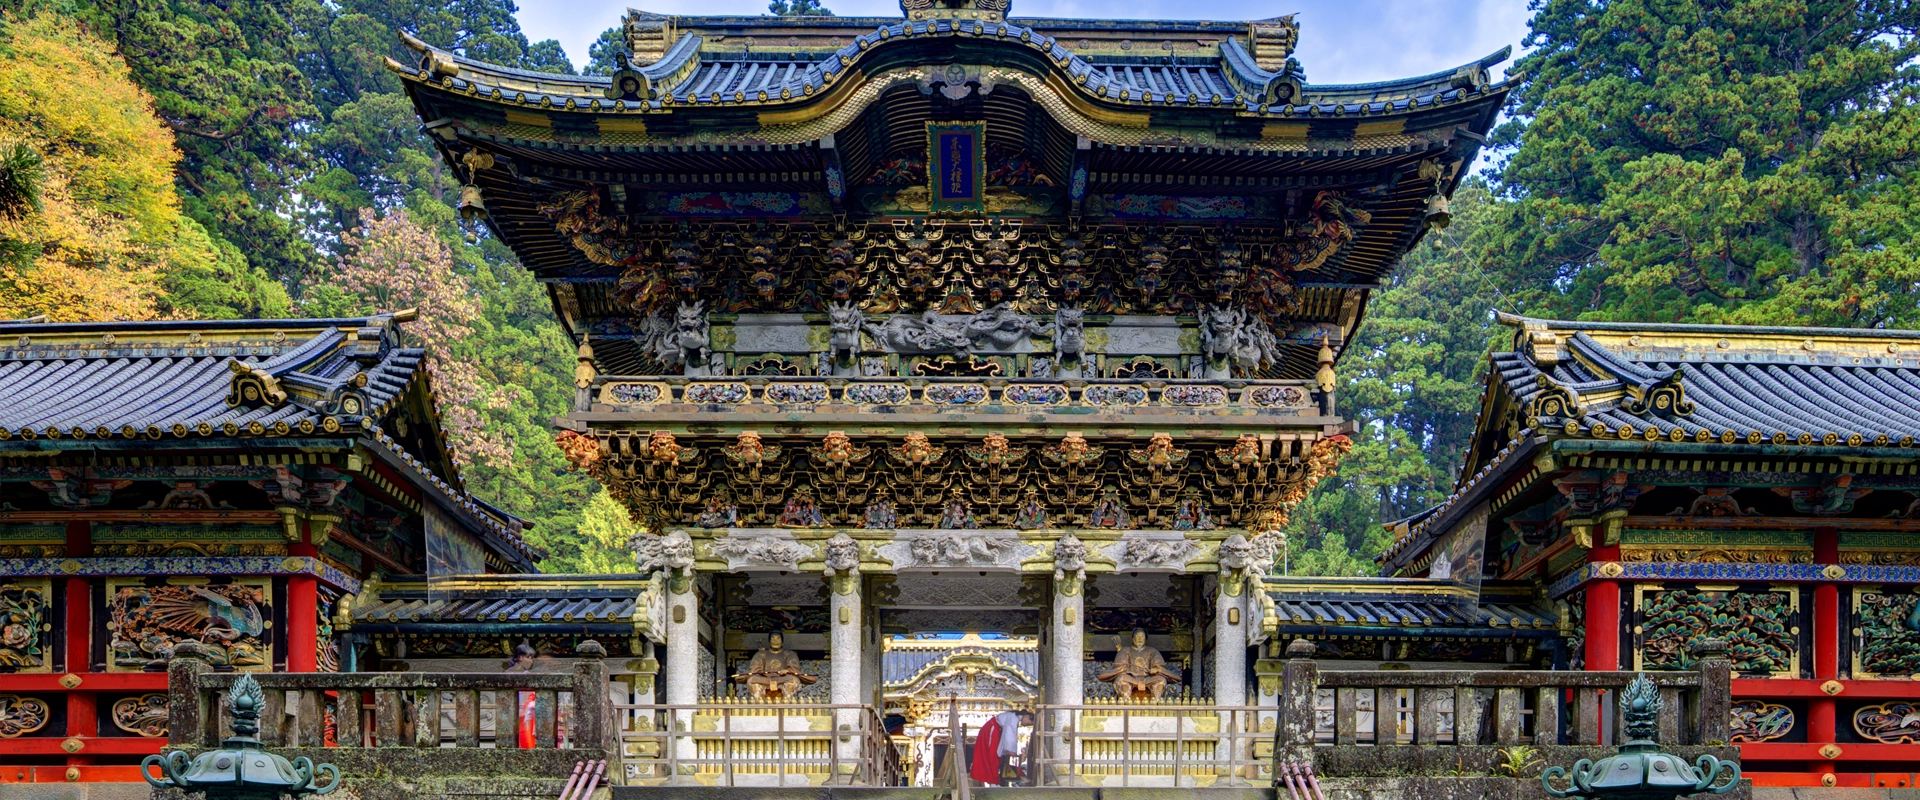 voyage au japon en famille Nikko temple toshogu